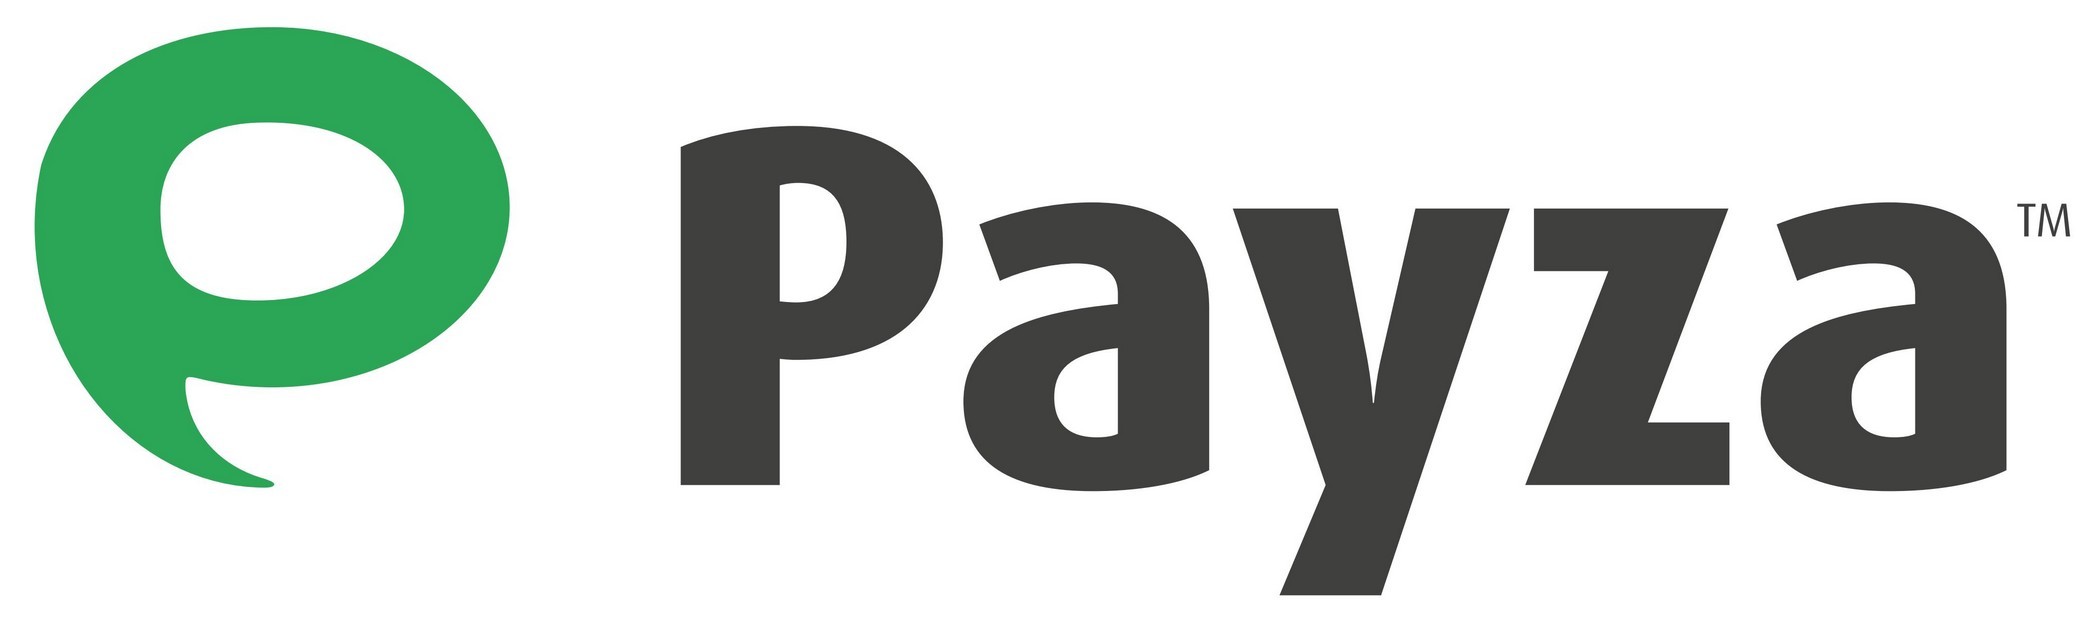 Payza Logo png